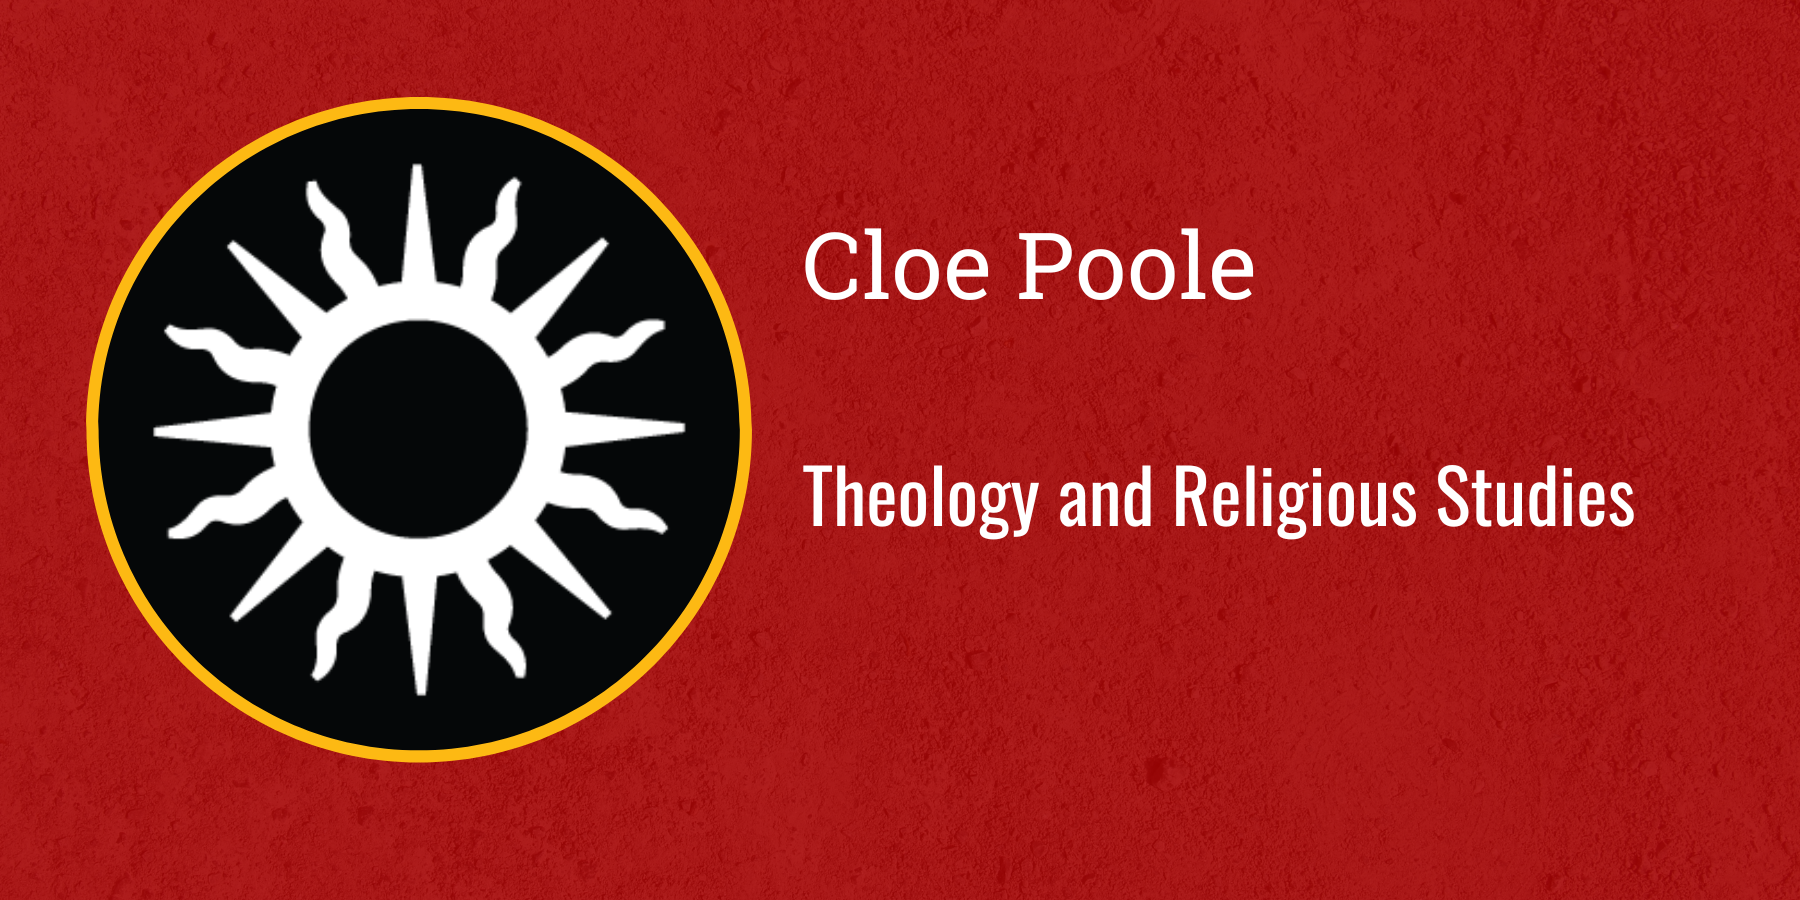 Cloe Poole
Theology and Religious Studies